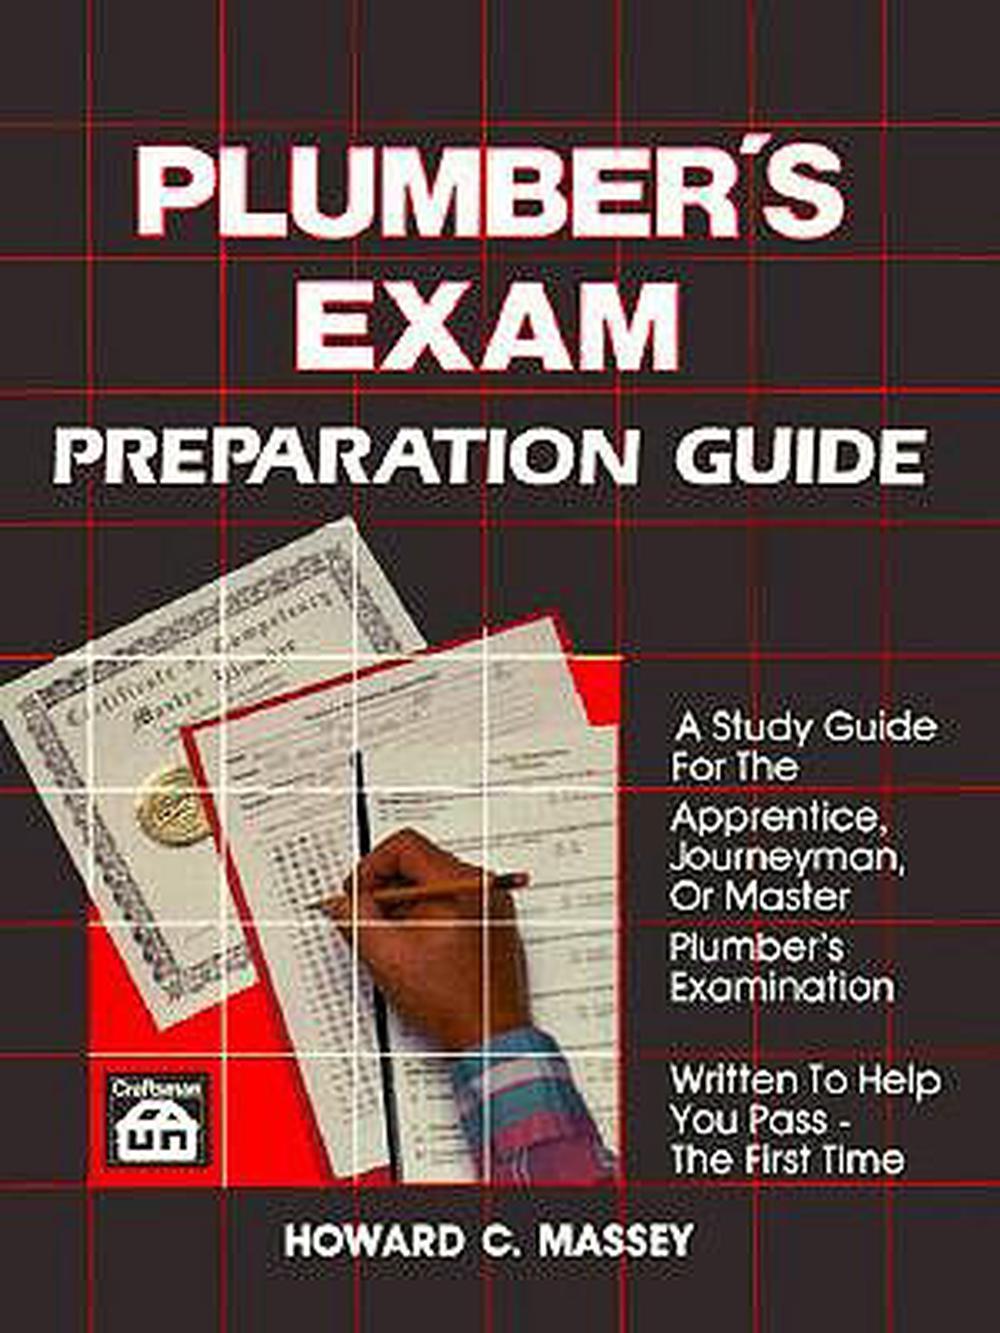 Virginia plumber installer license prep class download the new